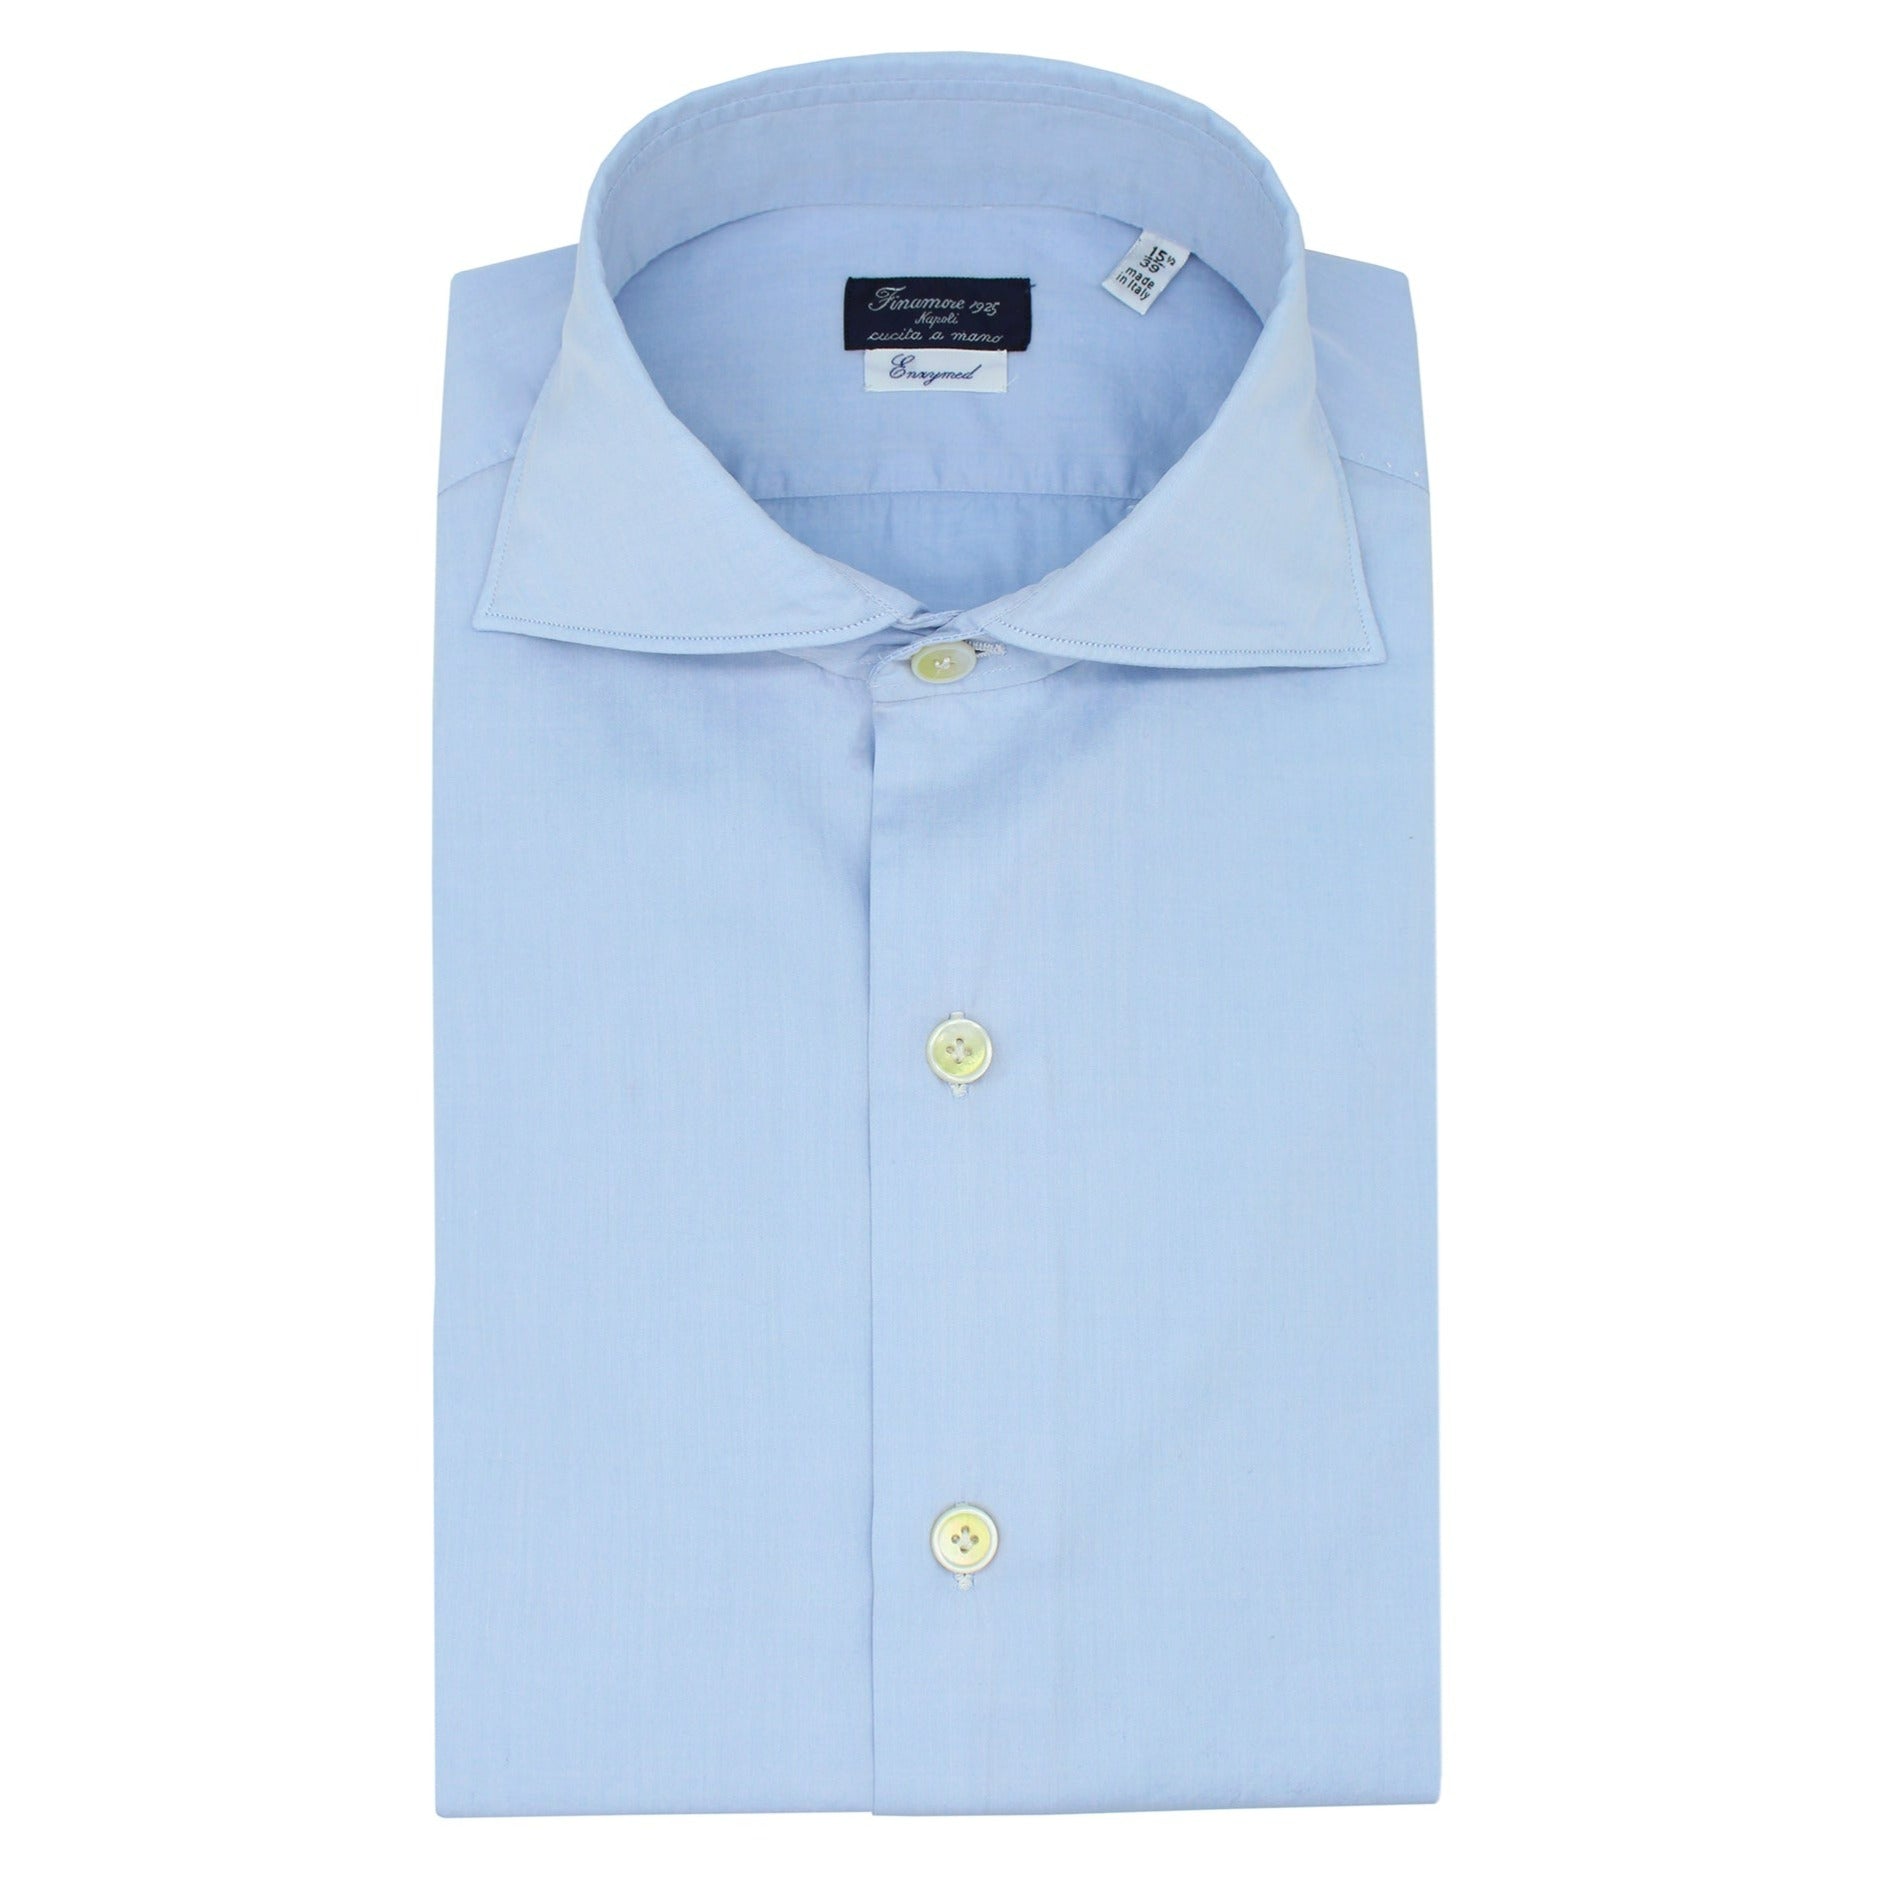 Milan slim fit shirt in light blue cotton enzymed treatment